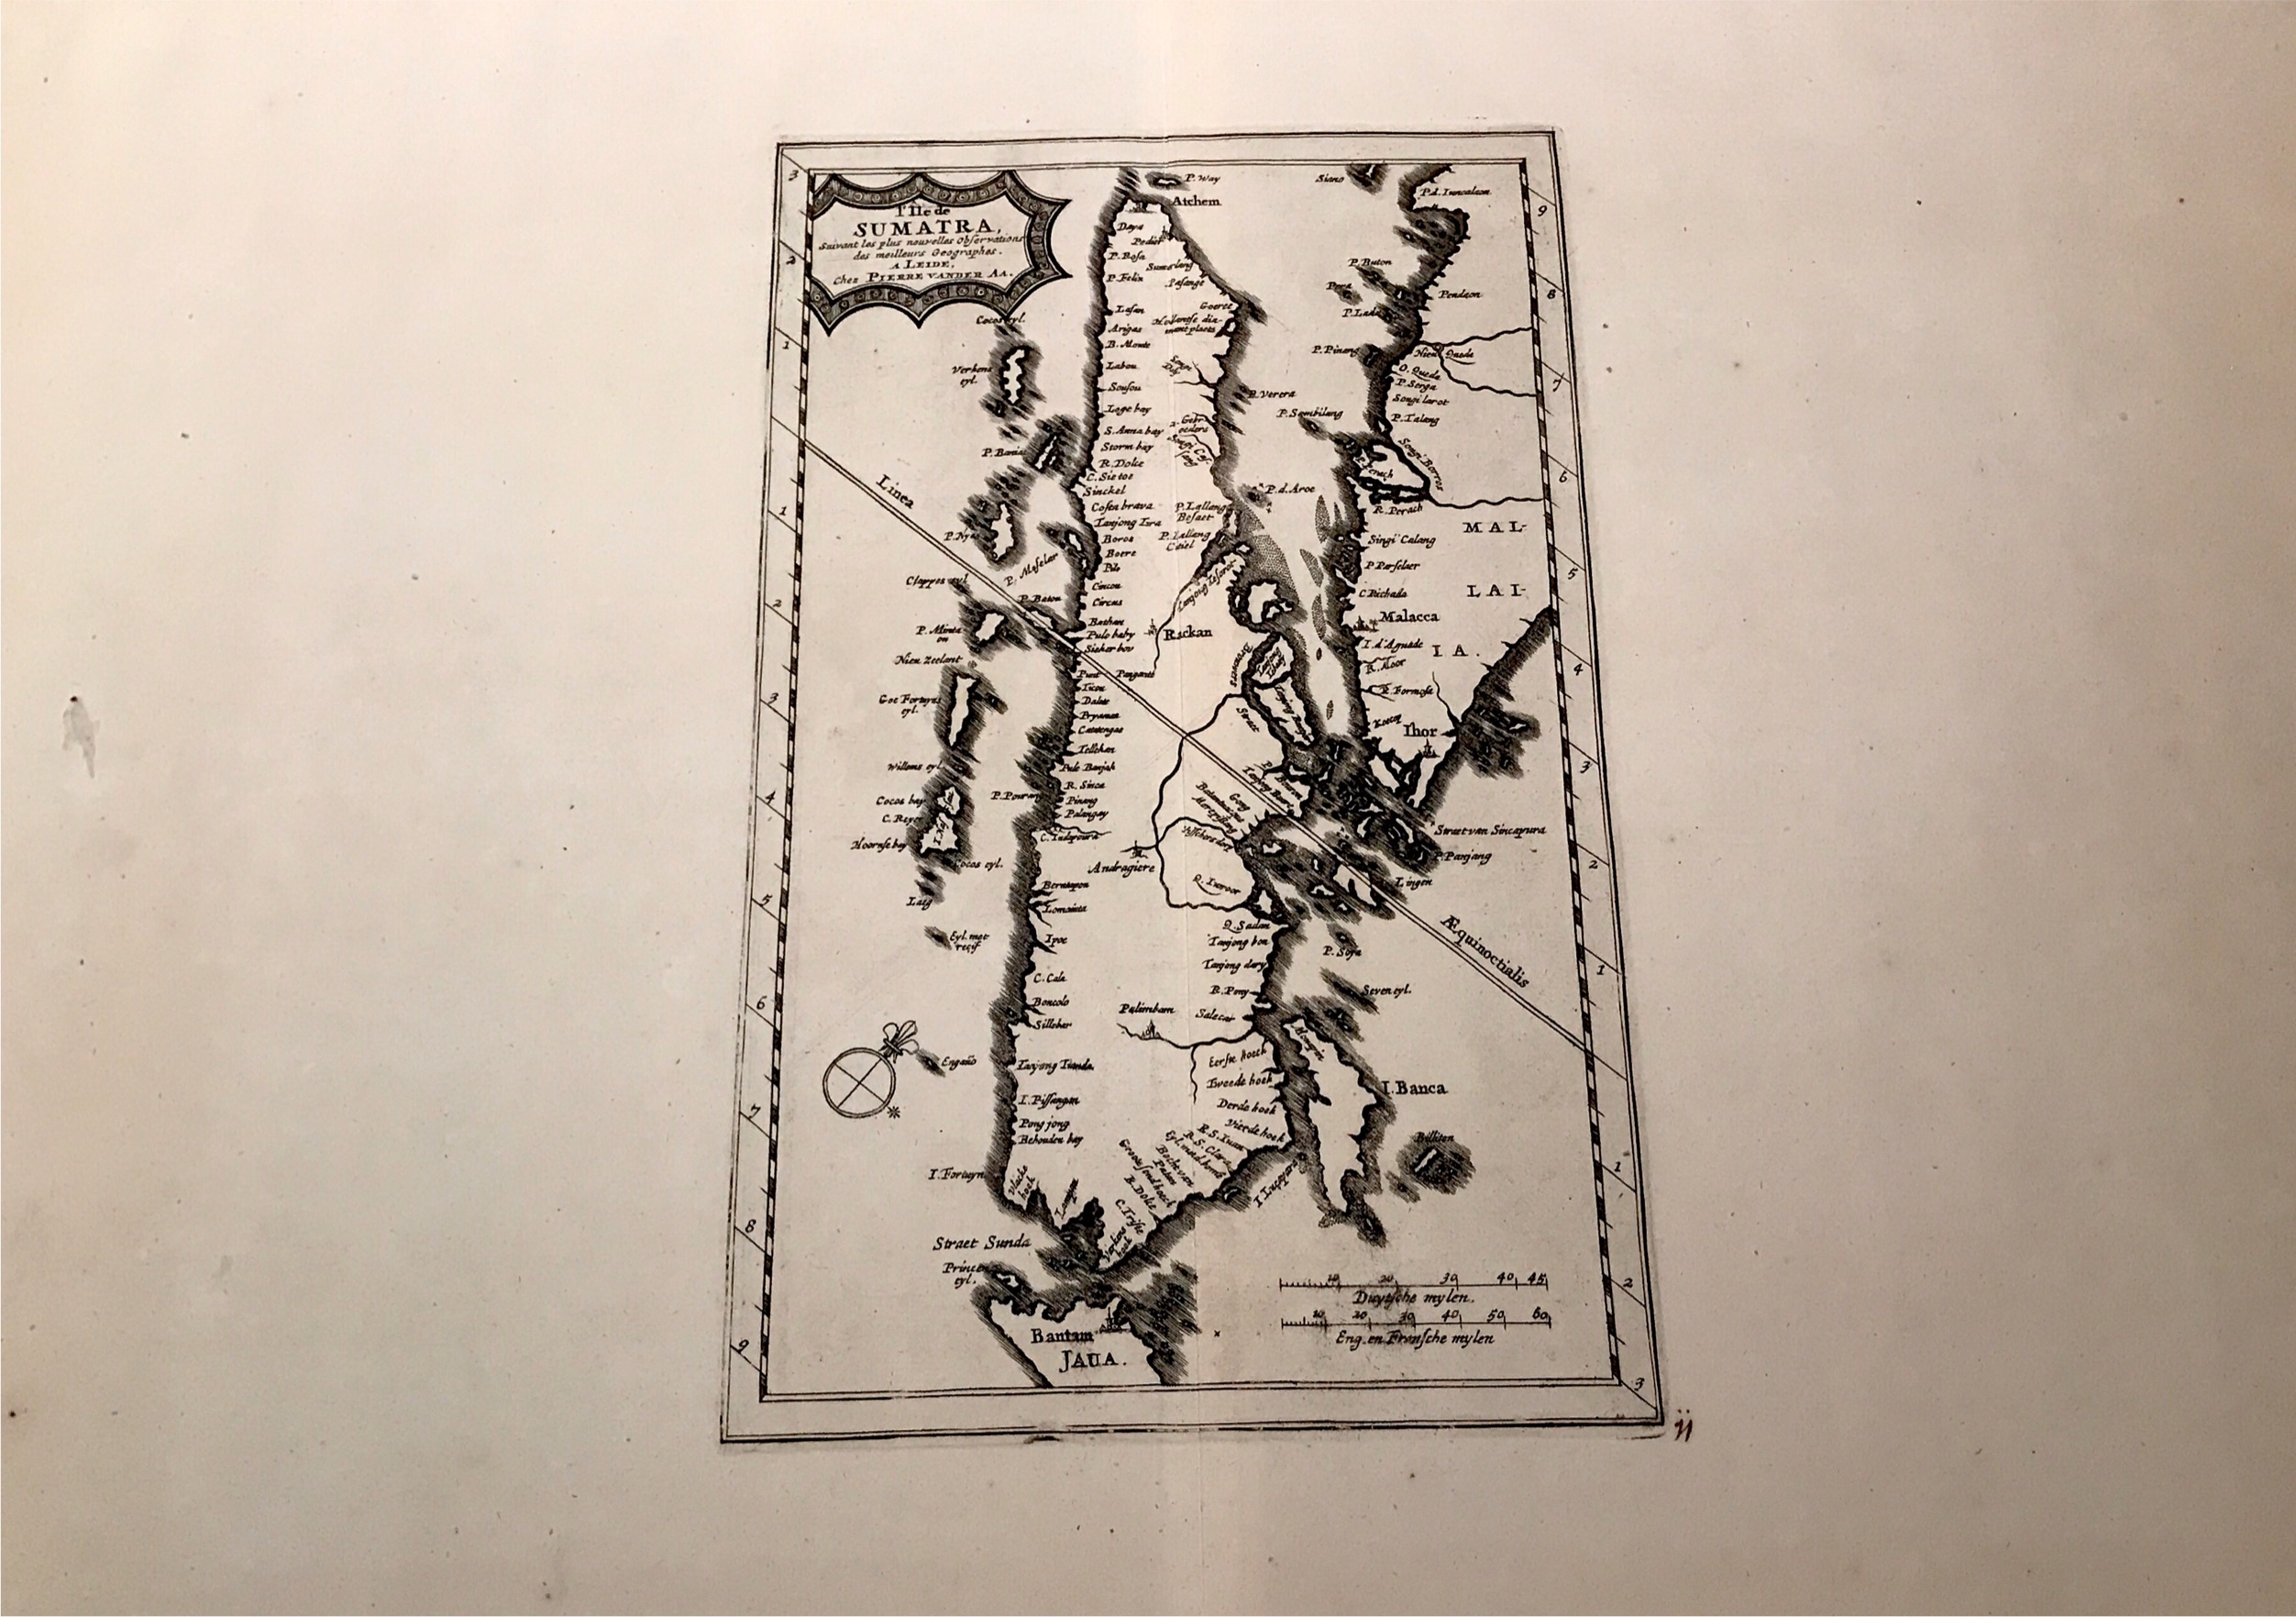 L'Ile de Sumatra - Van der Aa (1725)